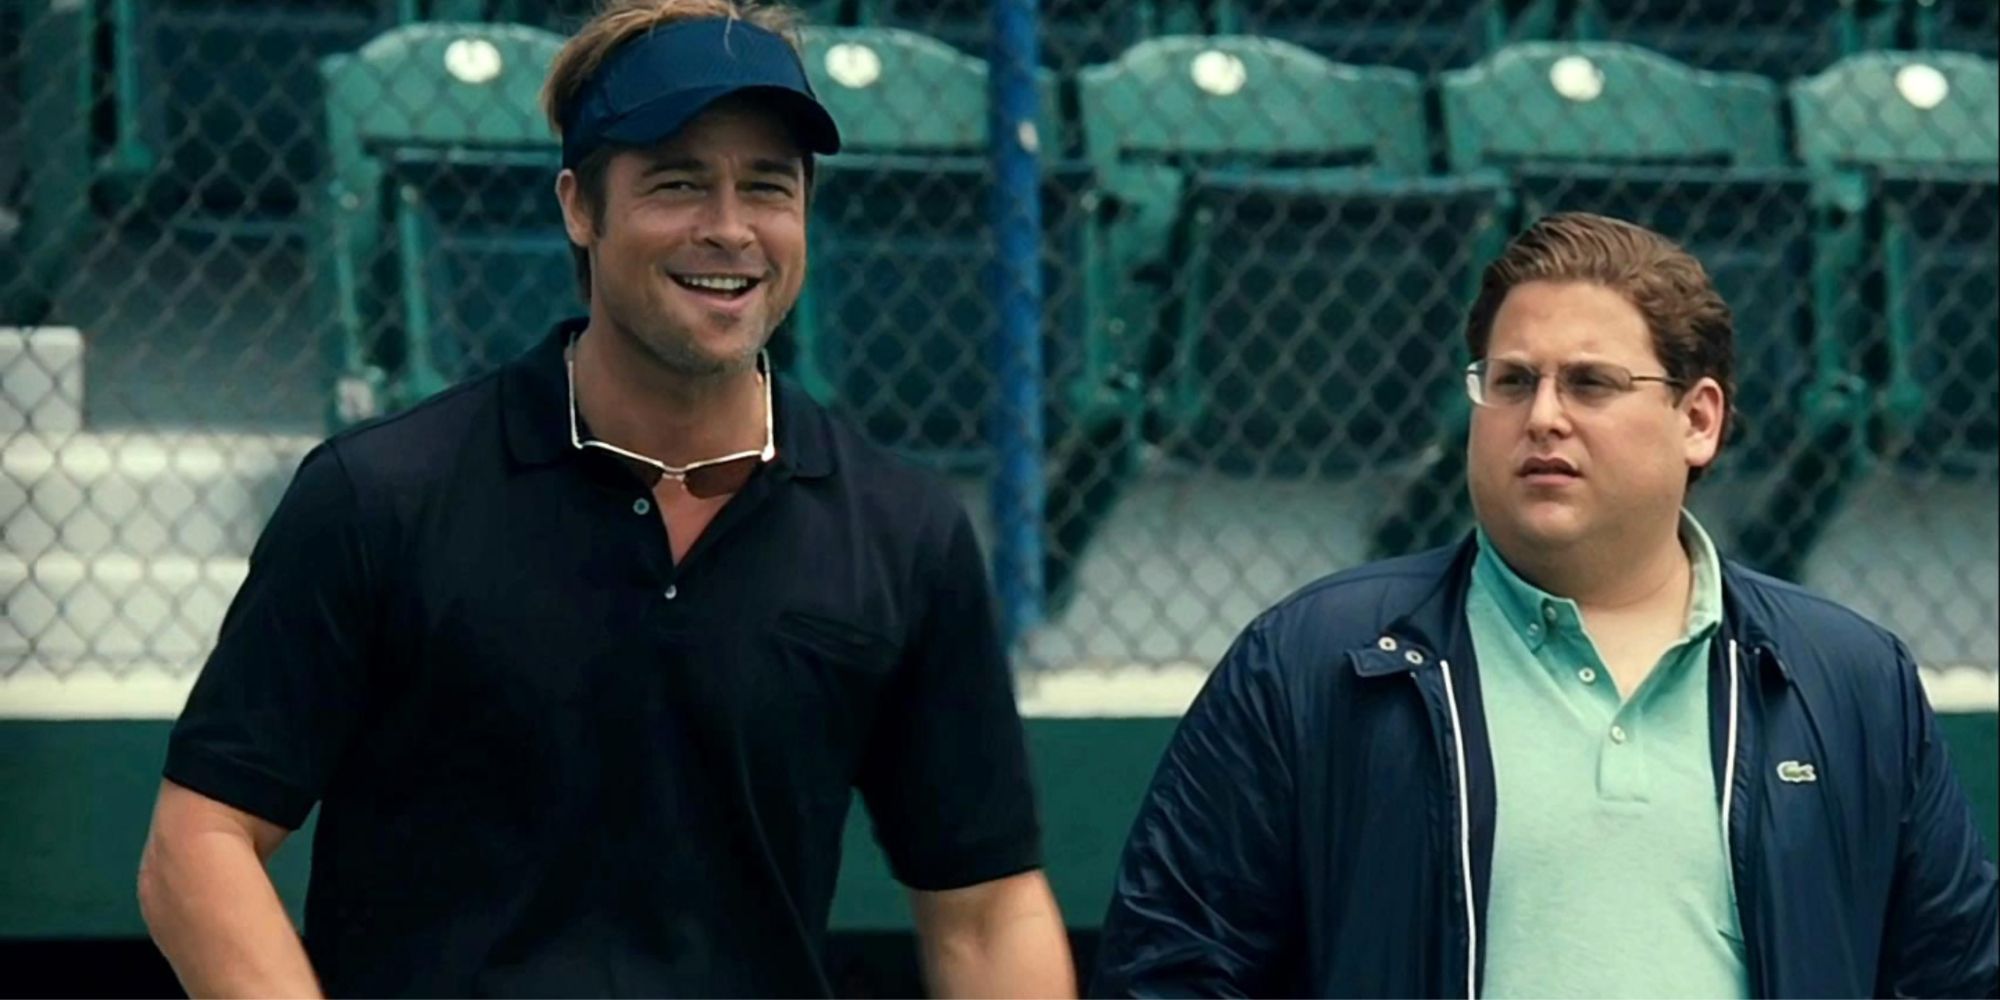 Brad Pitt as Billy Beane and Jonah Hill as Peter Brand stand near a baseball diamond in the film Moneyball